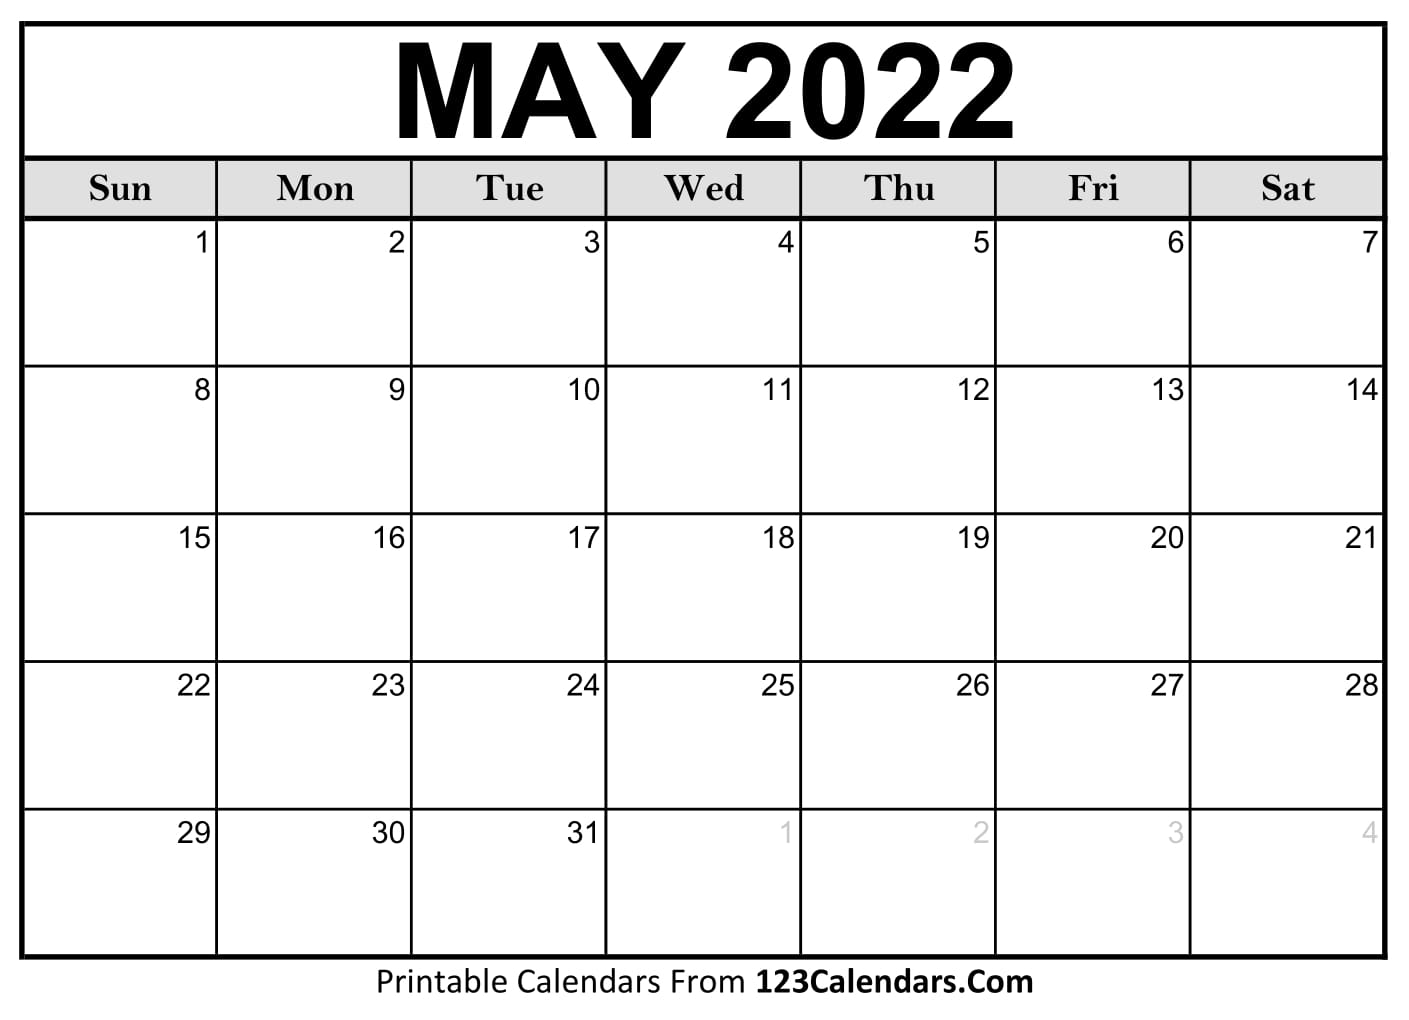 May 2022 Calendar Pdf Printable May 2022 Calendar Templates - 123Calendars.com